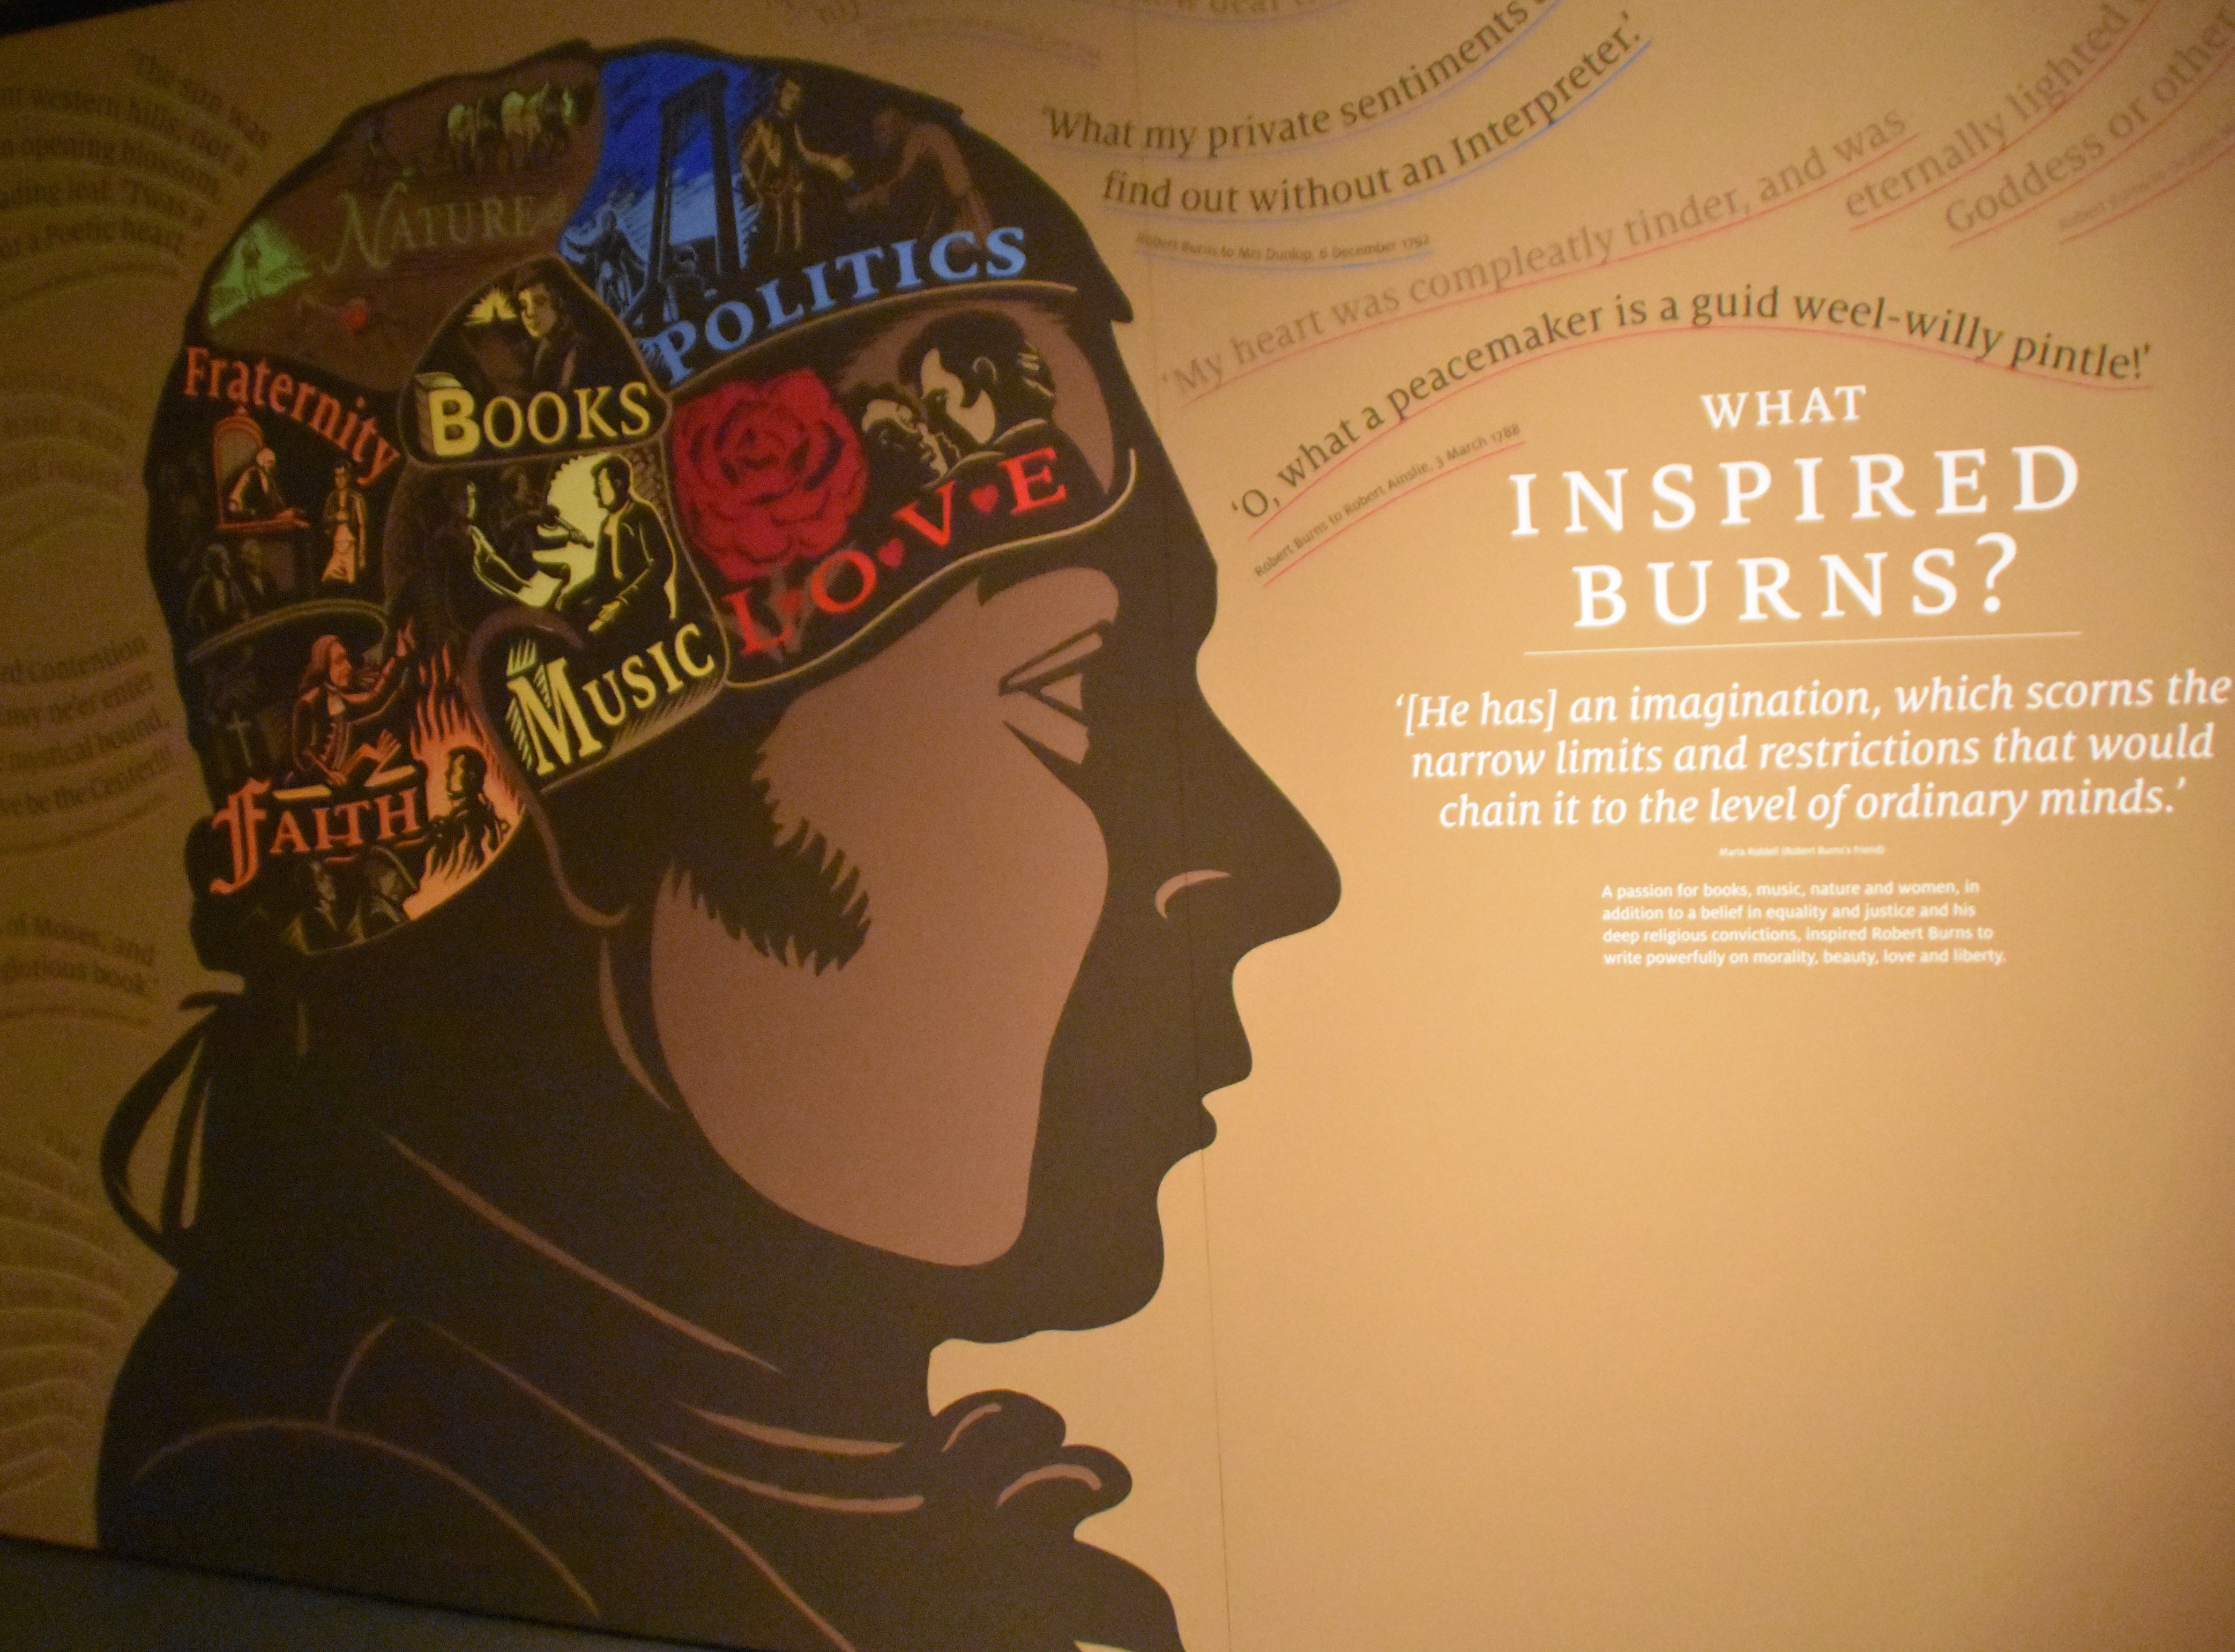 Robert Burns Museum - What Inspired Burns?